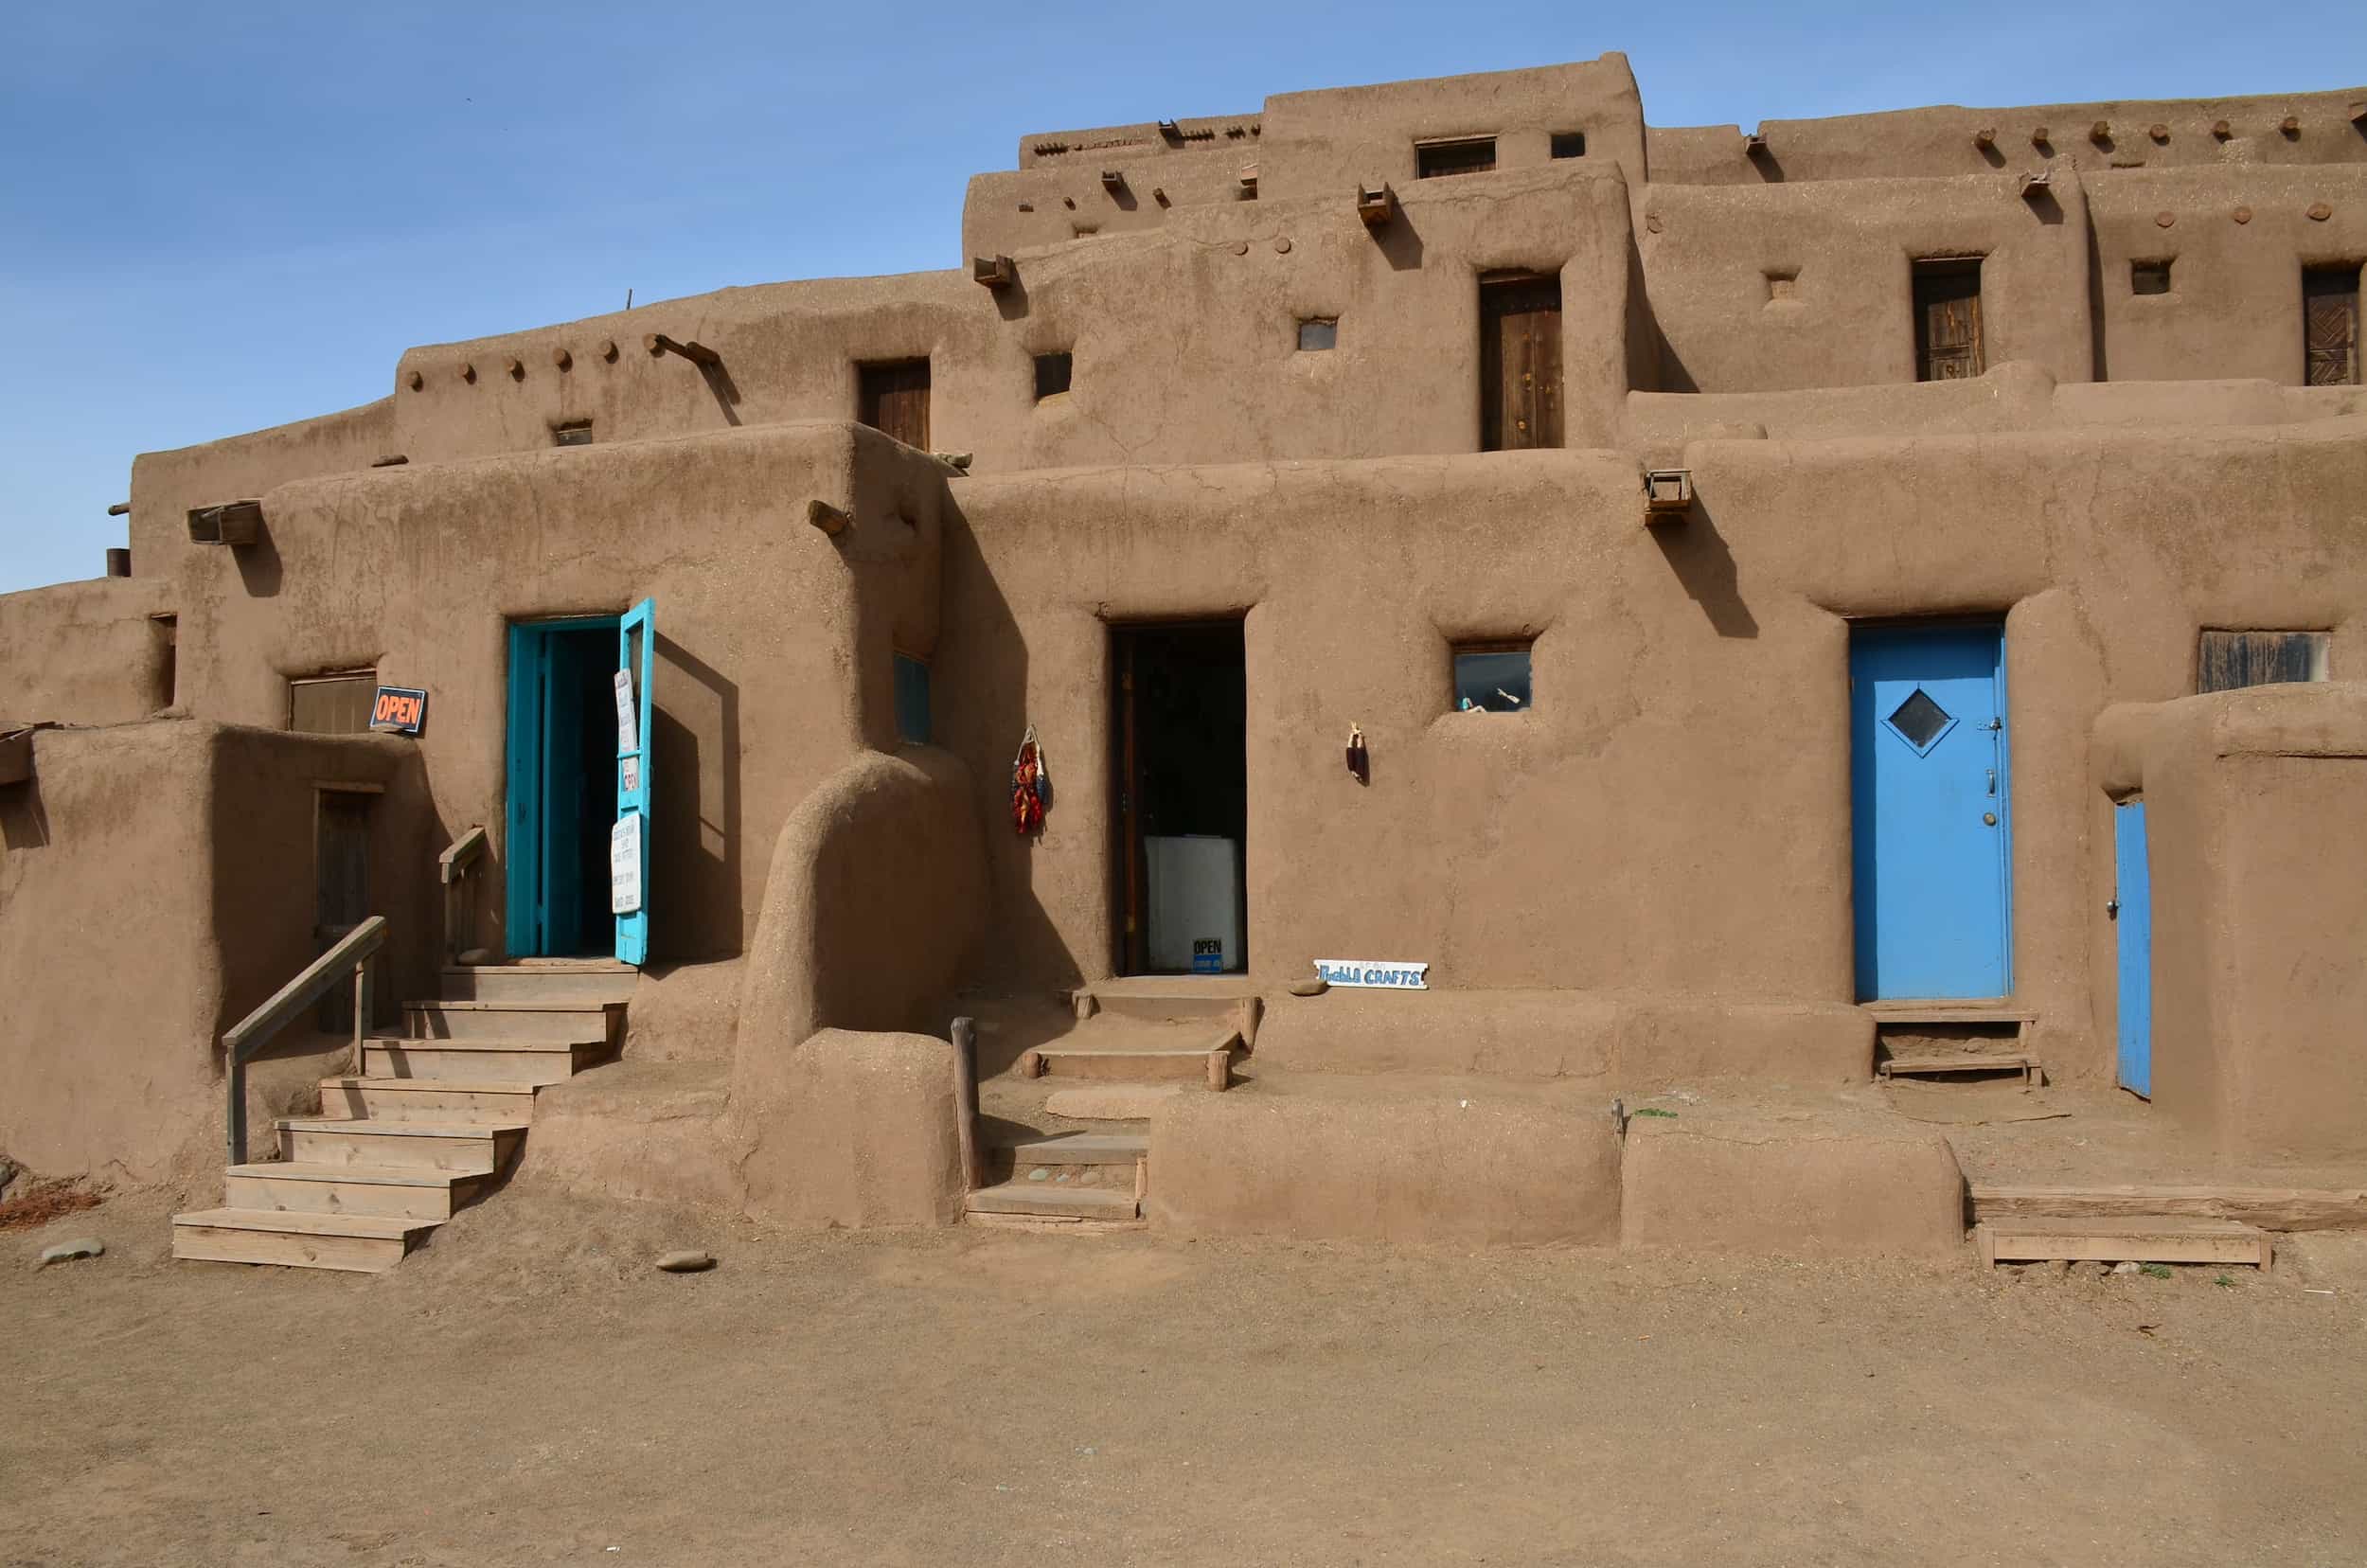 Hlauuma at Taos Pueblo in Taos, New Mexico